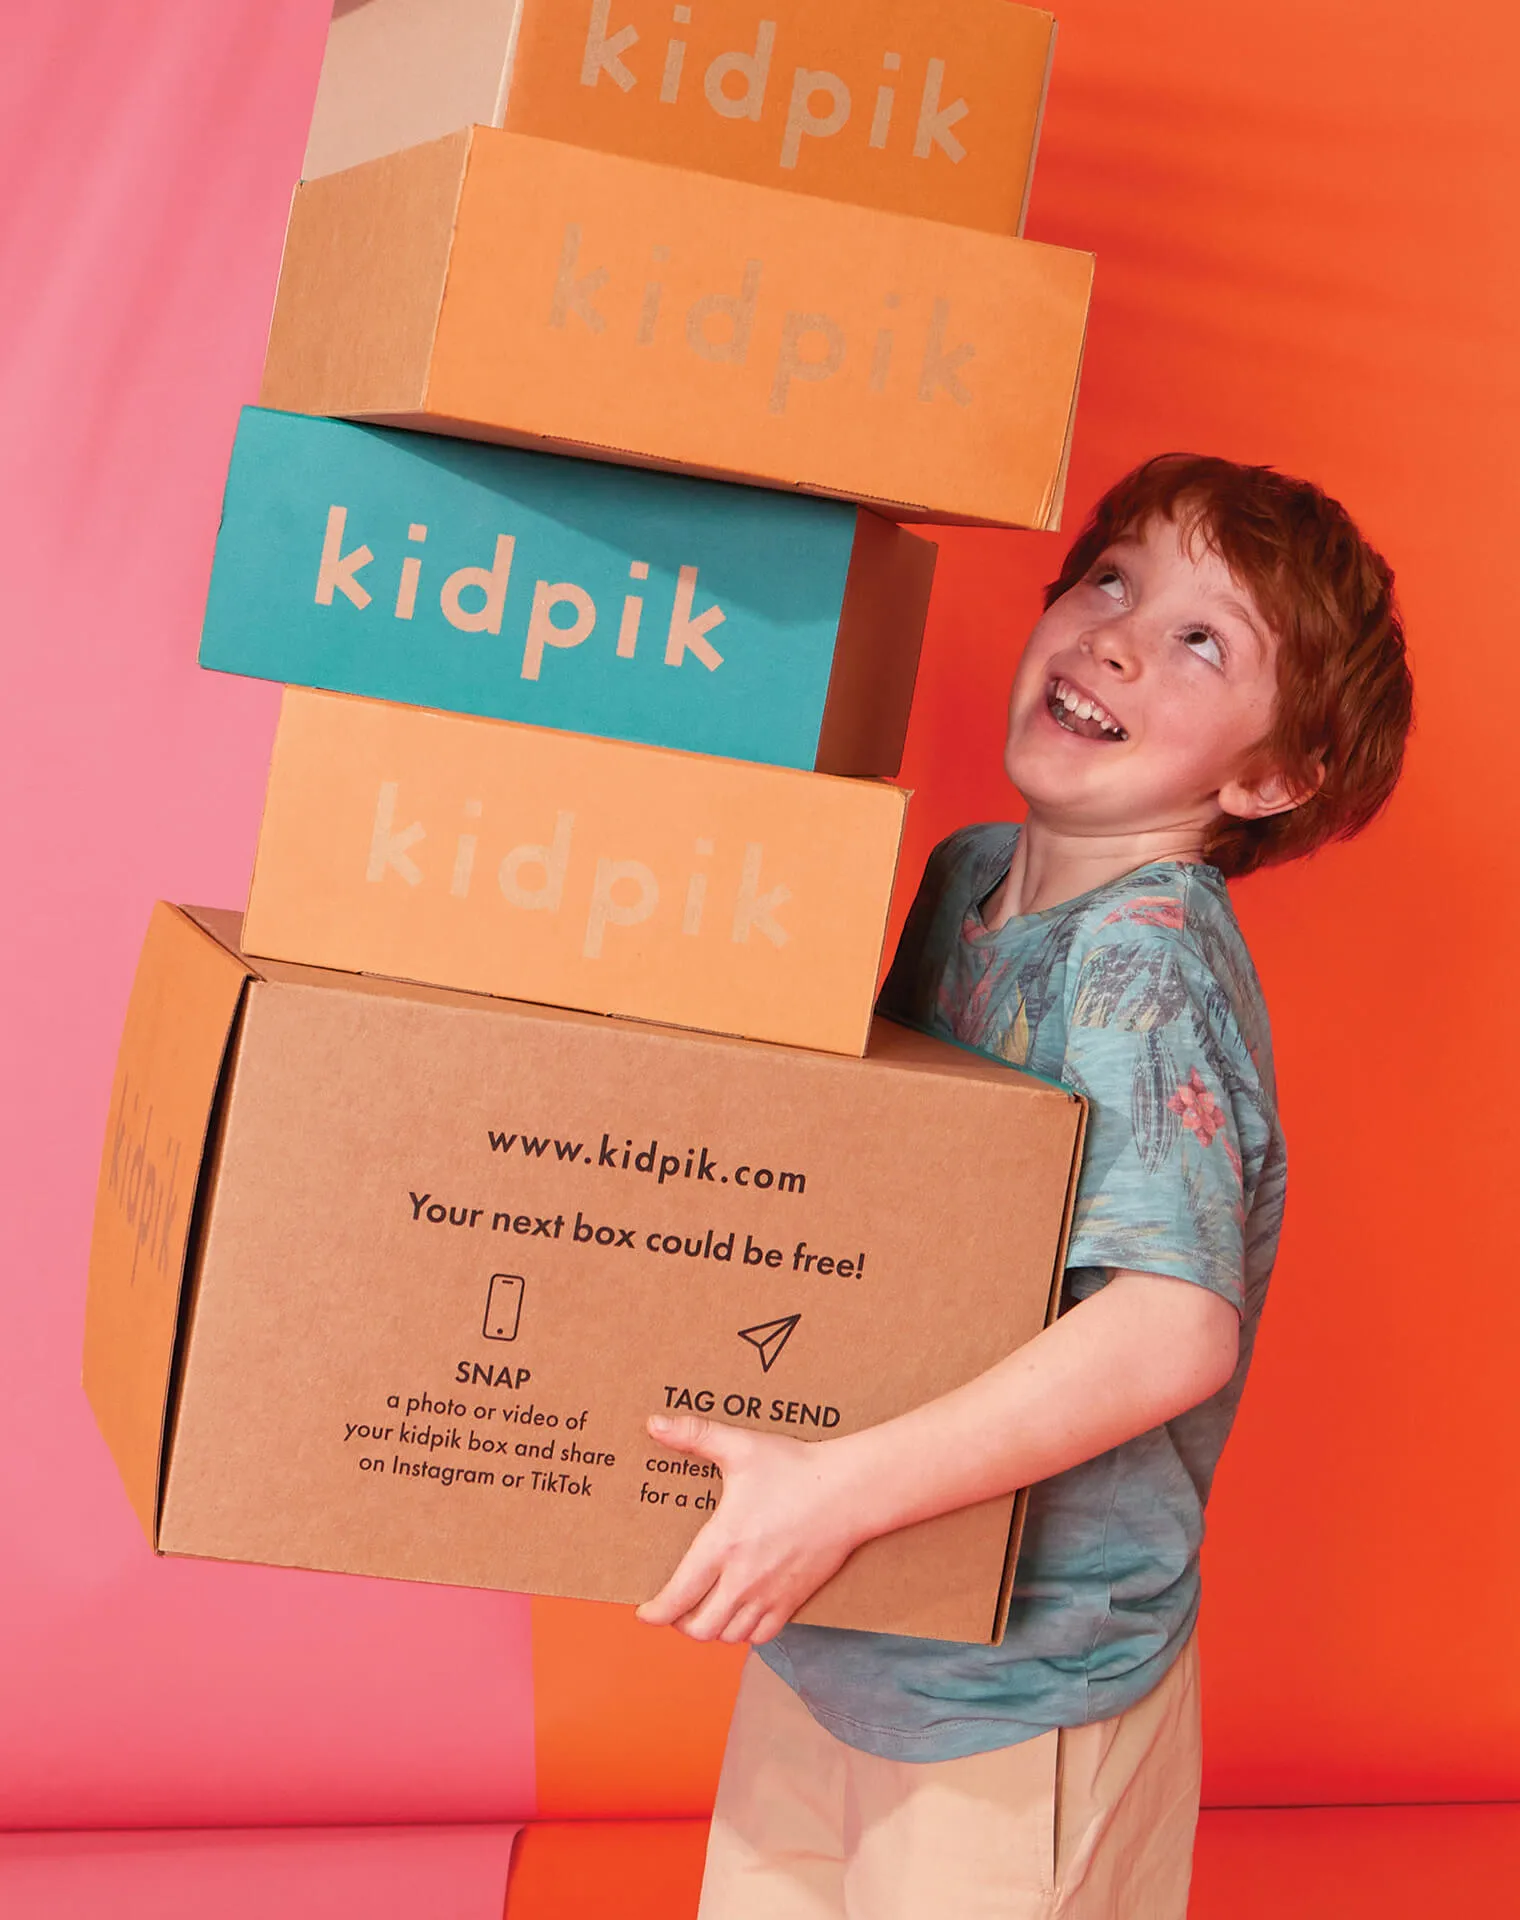 Kidpik clothing subscription box for kids 